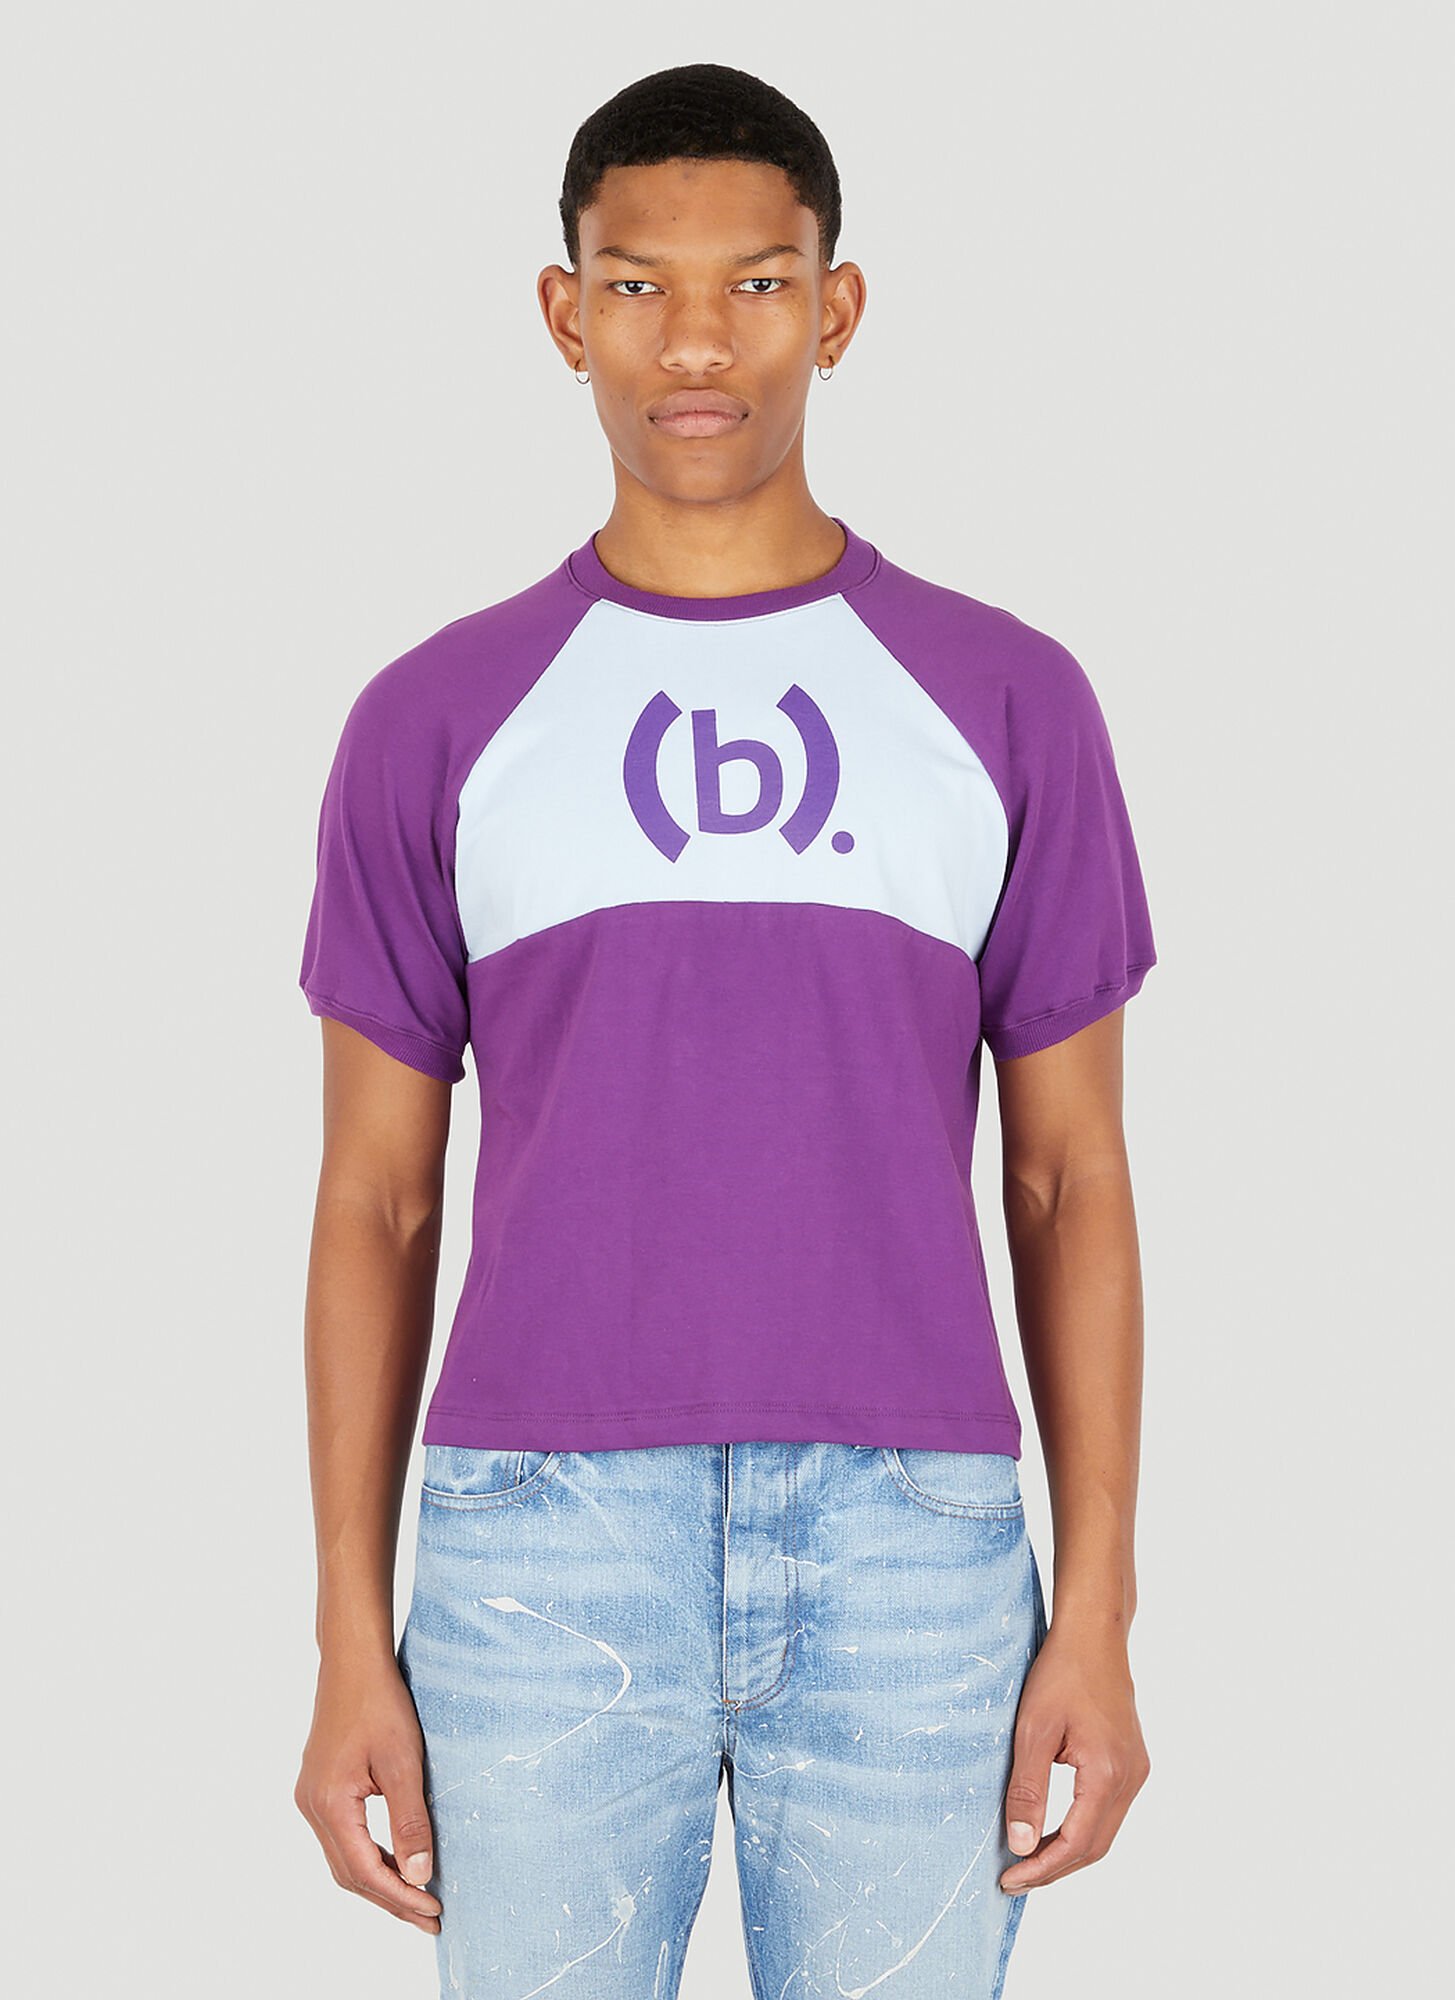 Bstroy (b). T-shirt In Purple